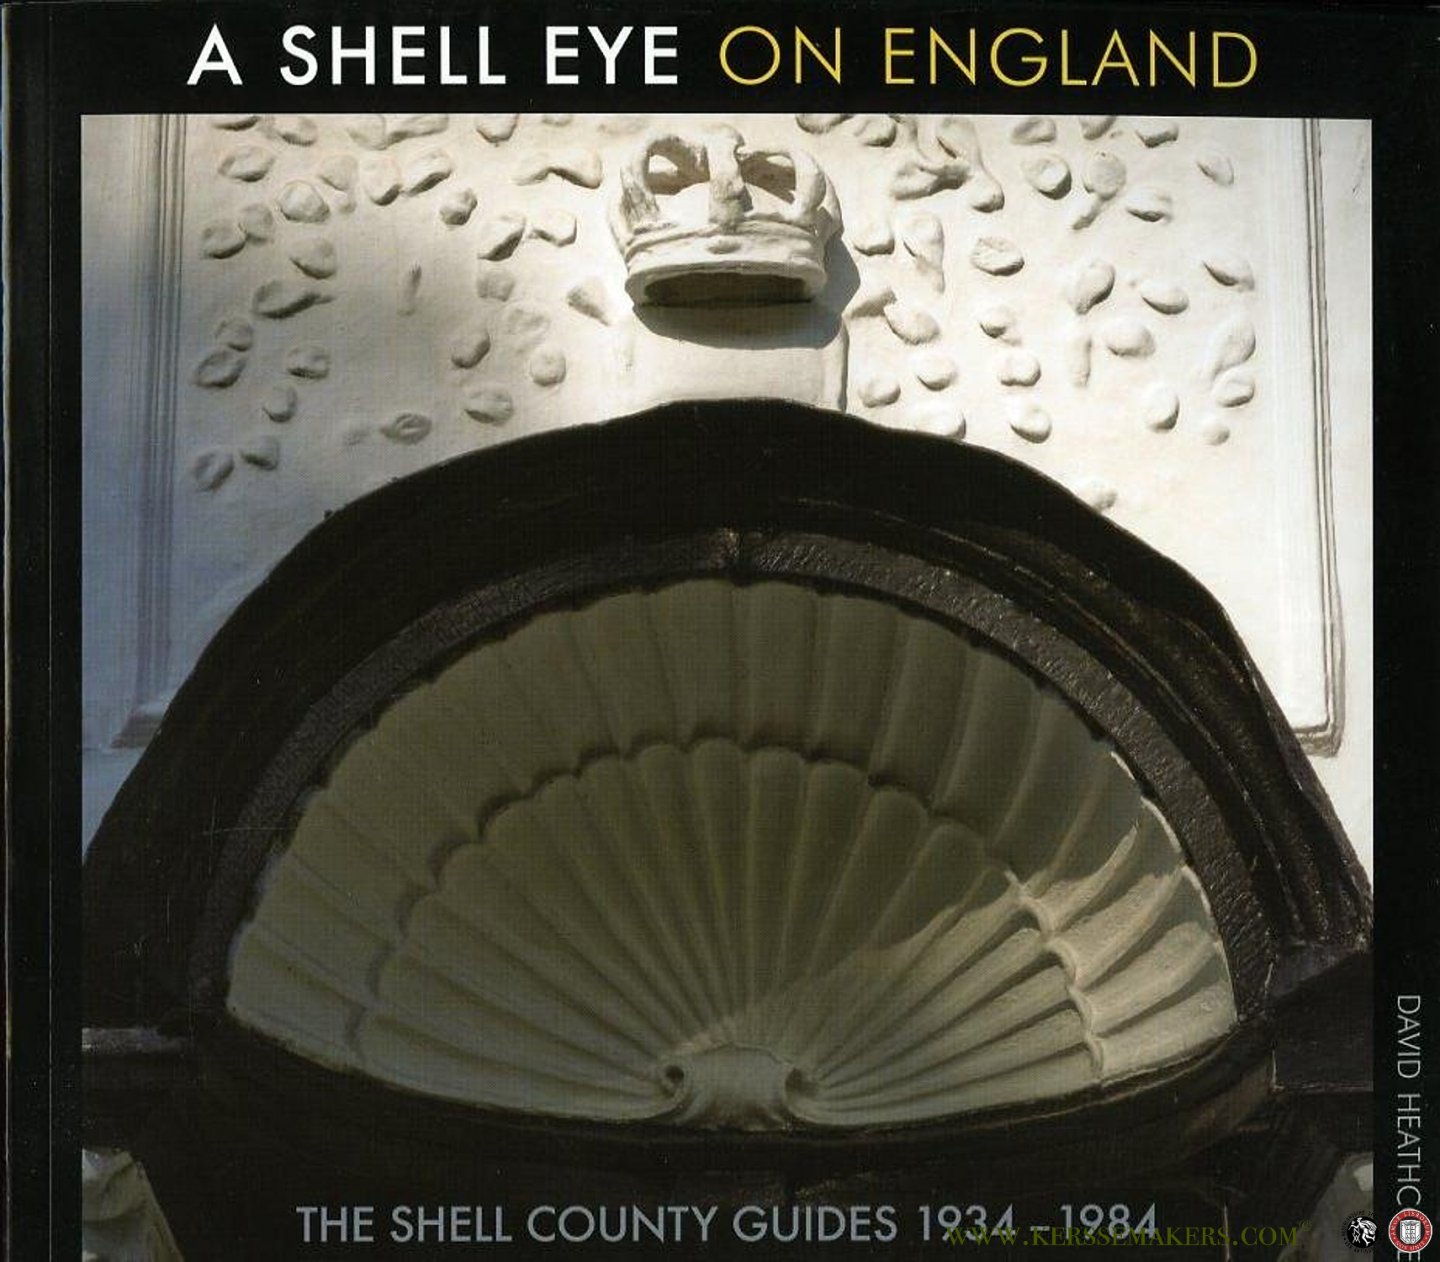 HEATHCOTE, David - A Shell Eye on England. The Shell County Guides 1934-1984.